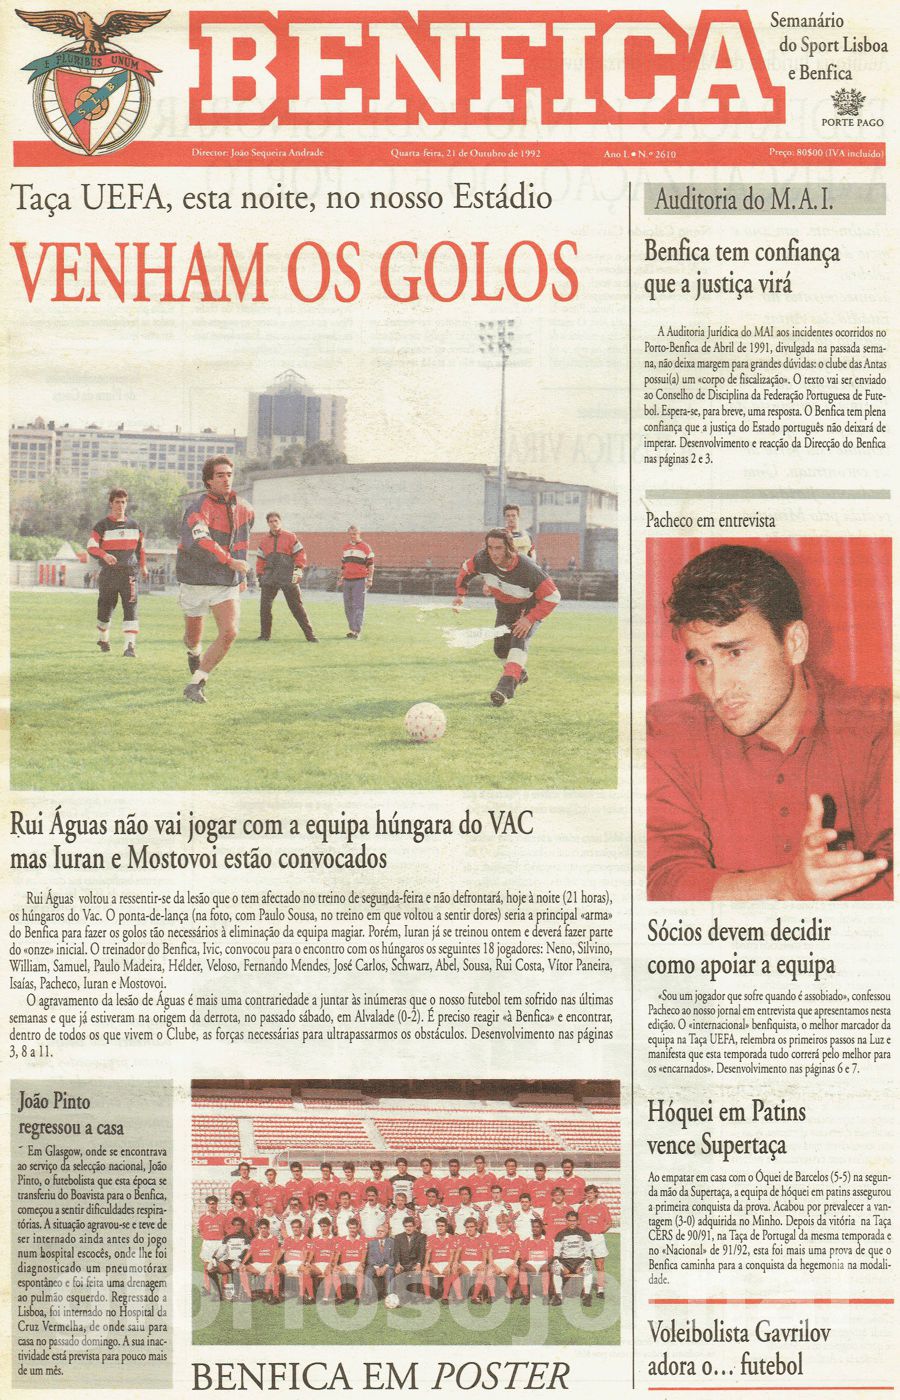 jornal o benfica 2610 1992-10-21